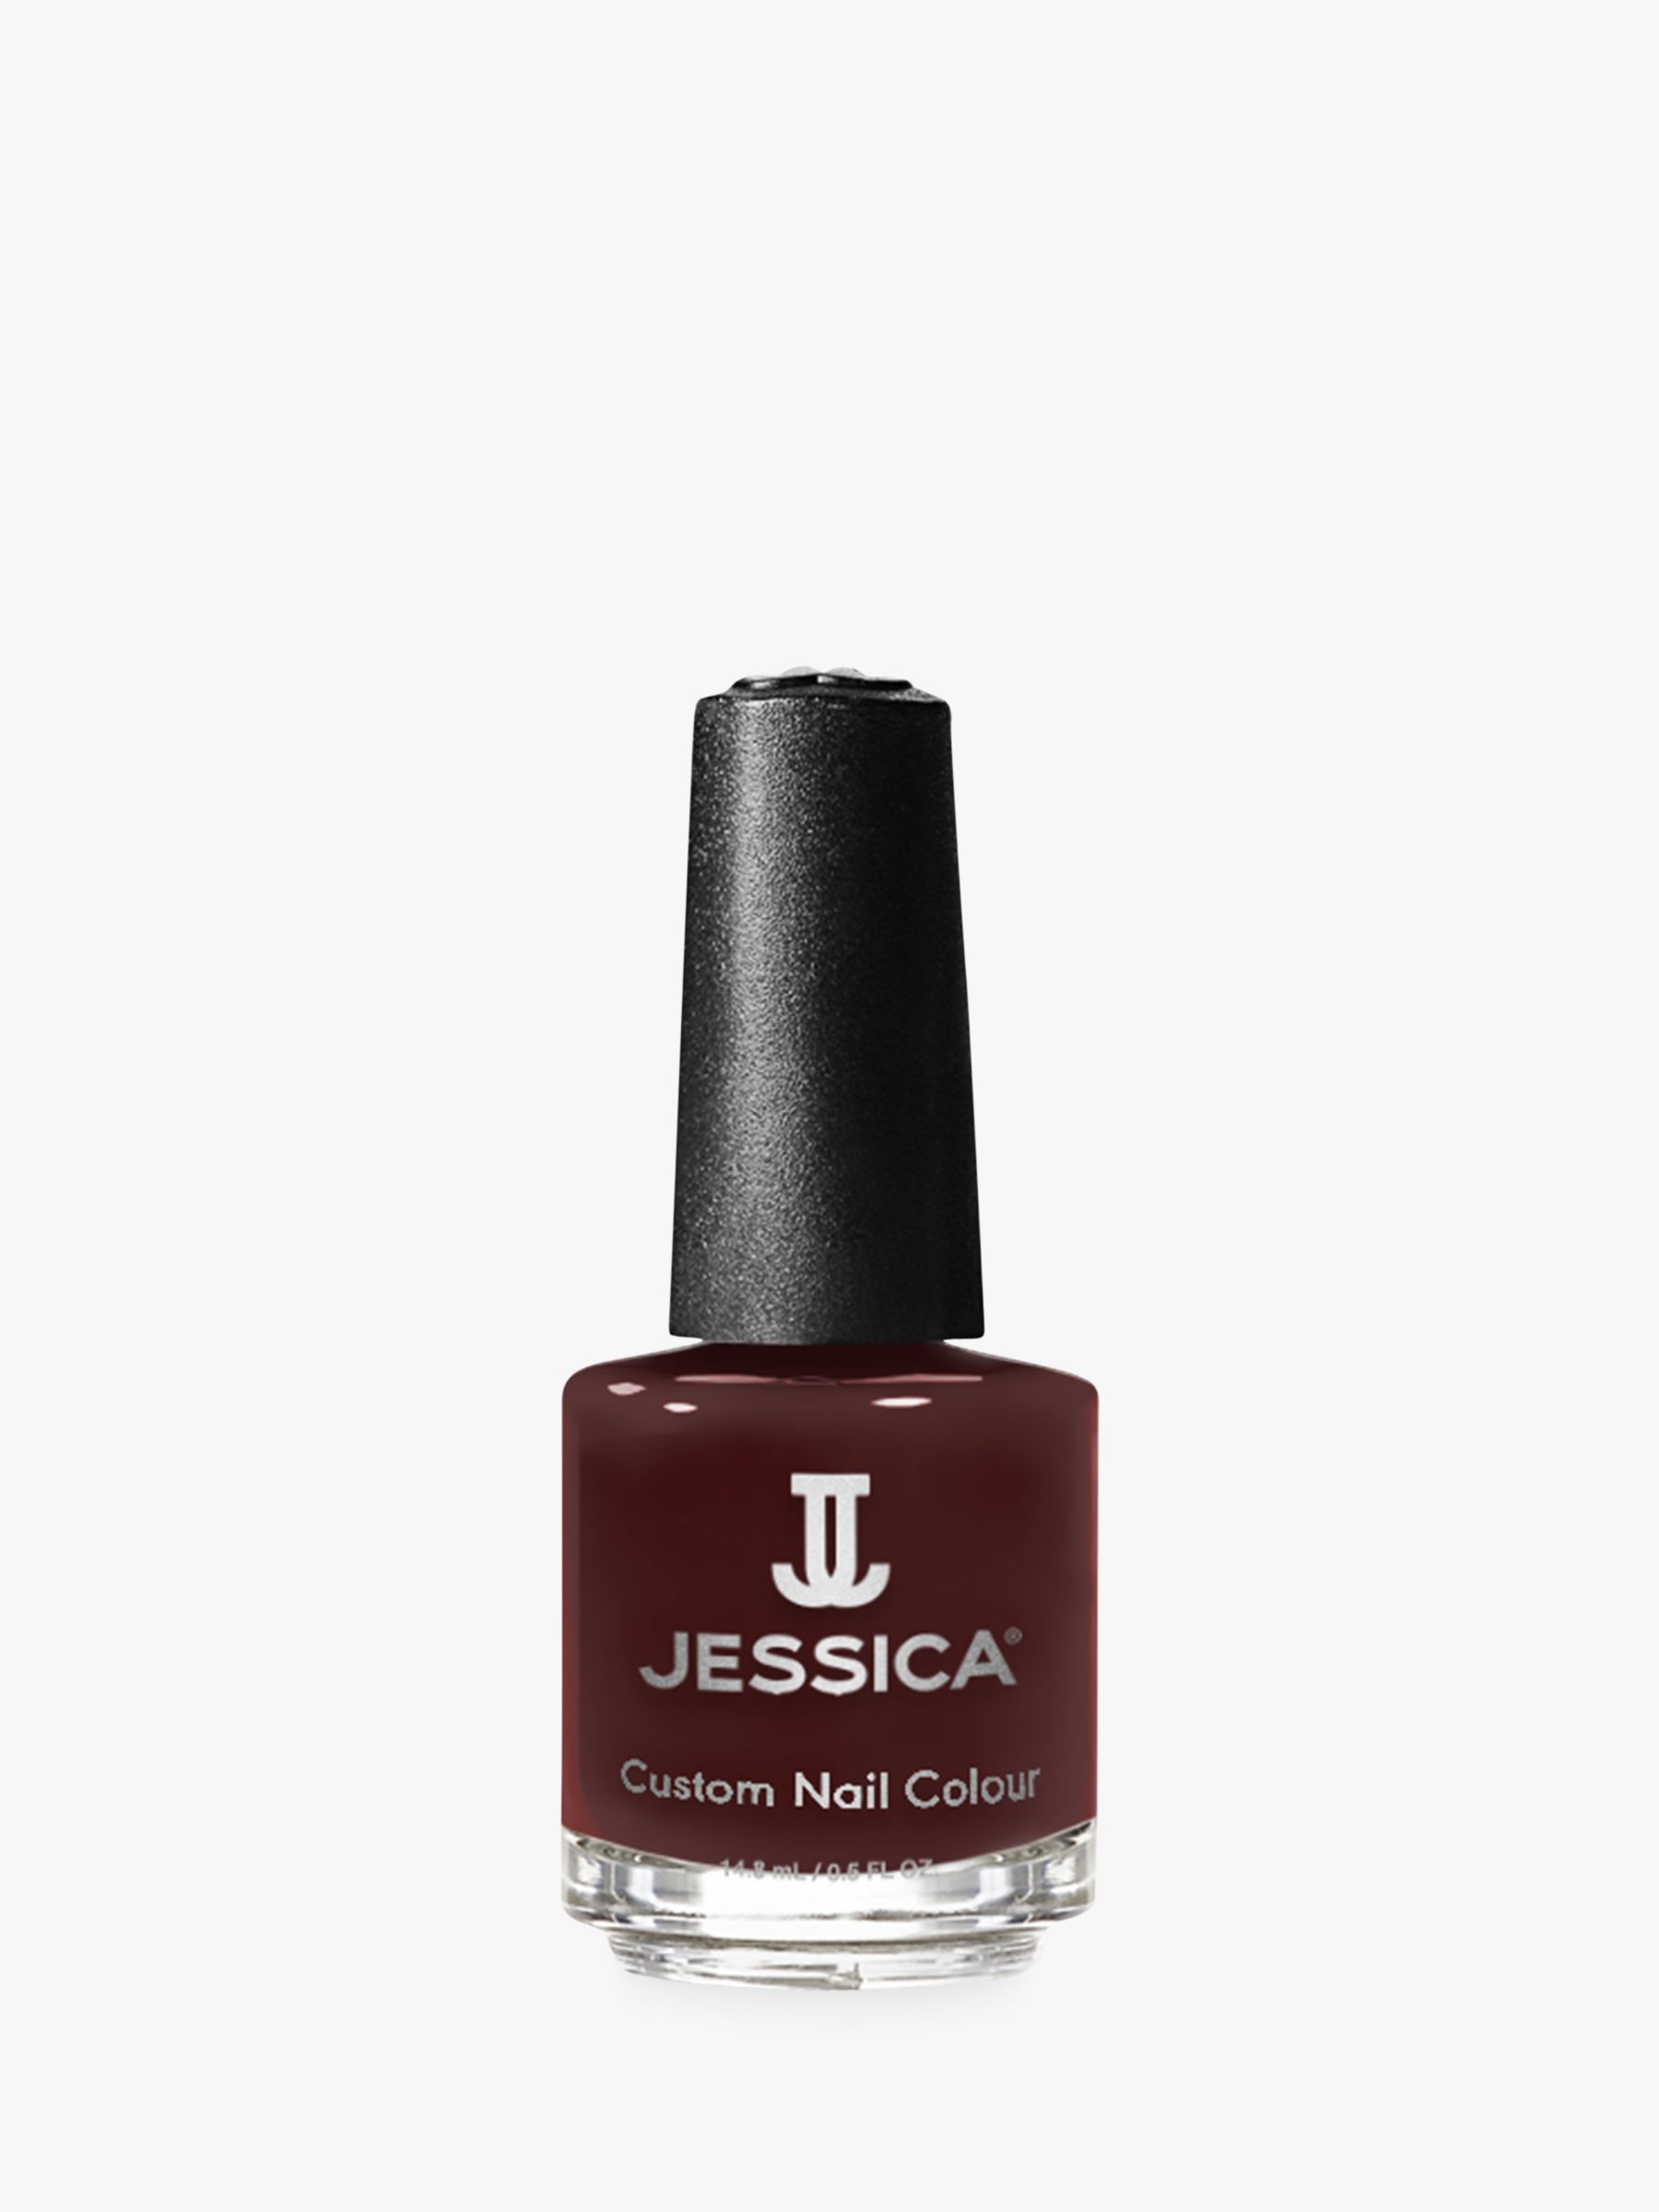 Jessica Custom Nail Colour, Autumn Romance